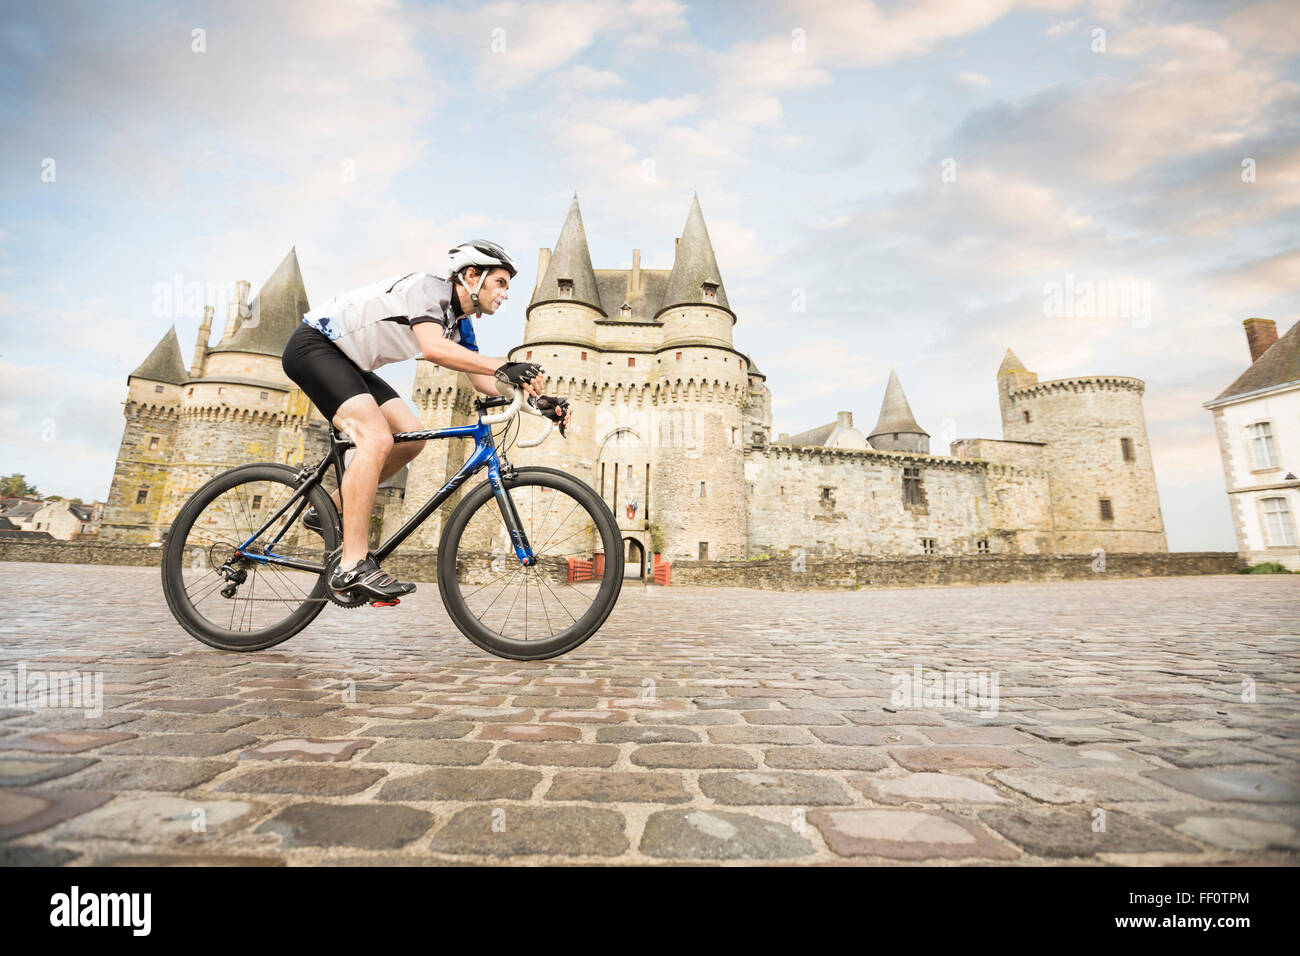 Caucasian man cycling near castle Stock Photo